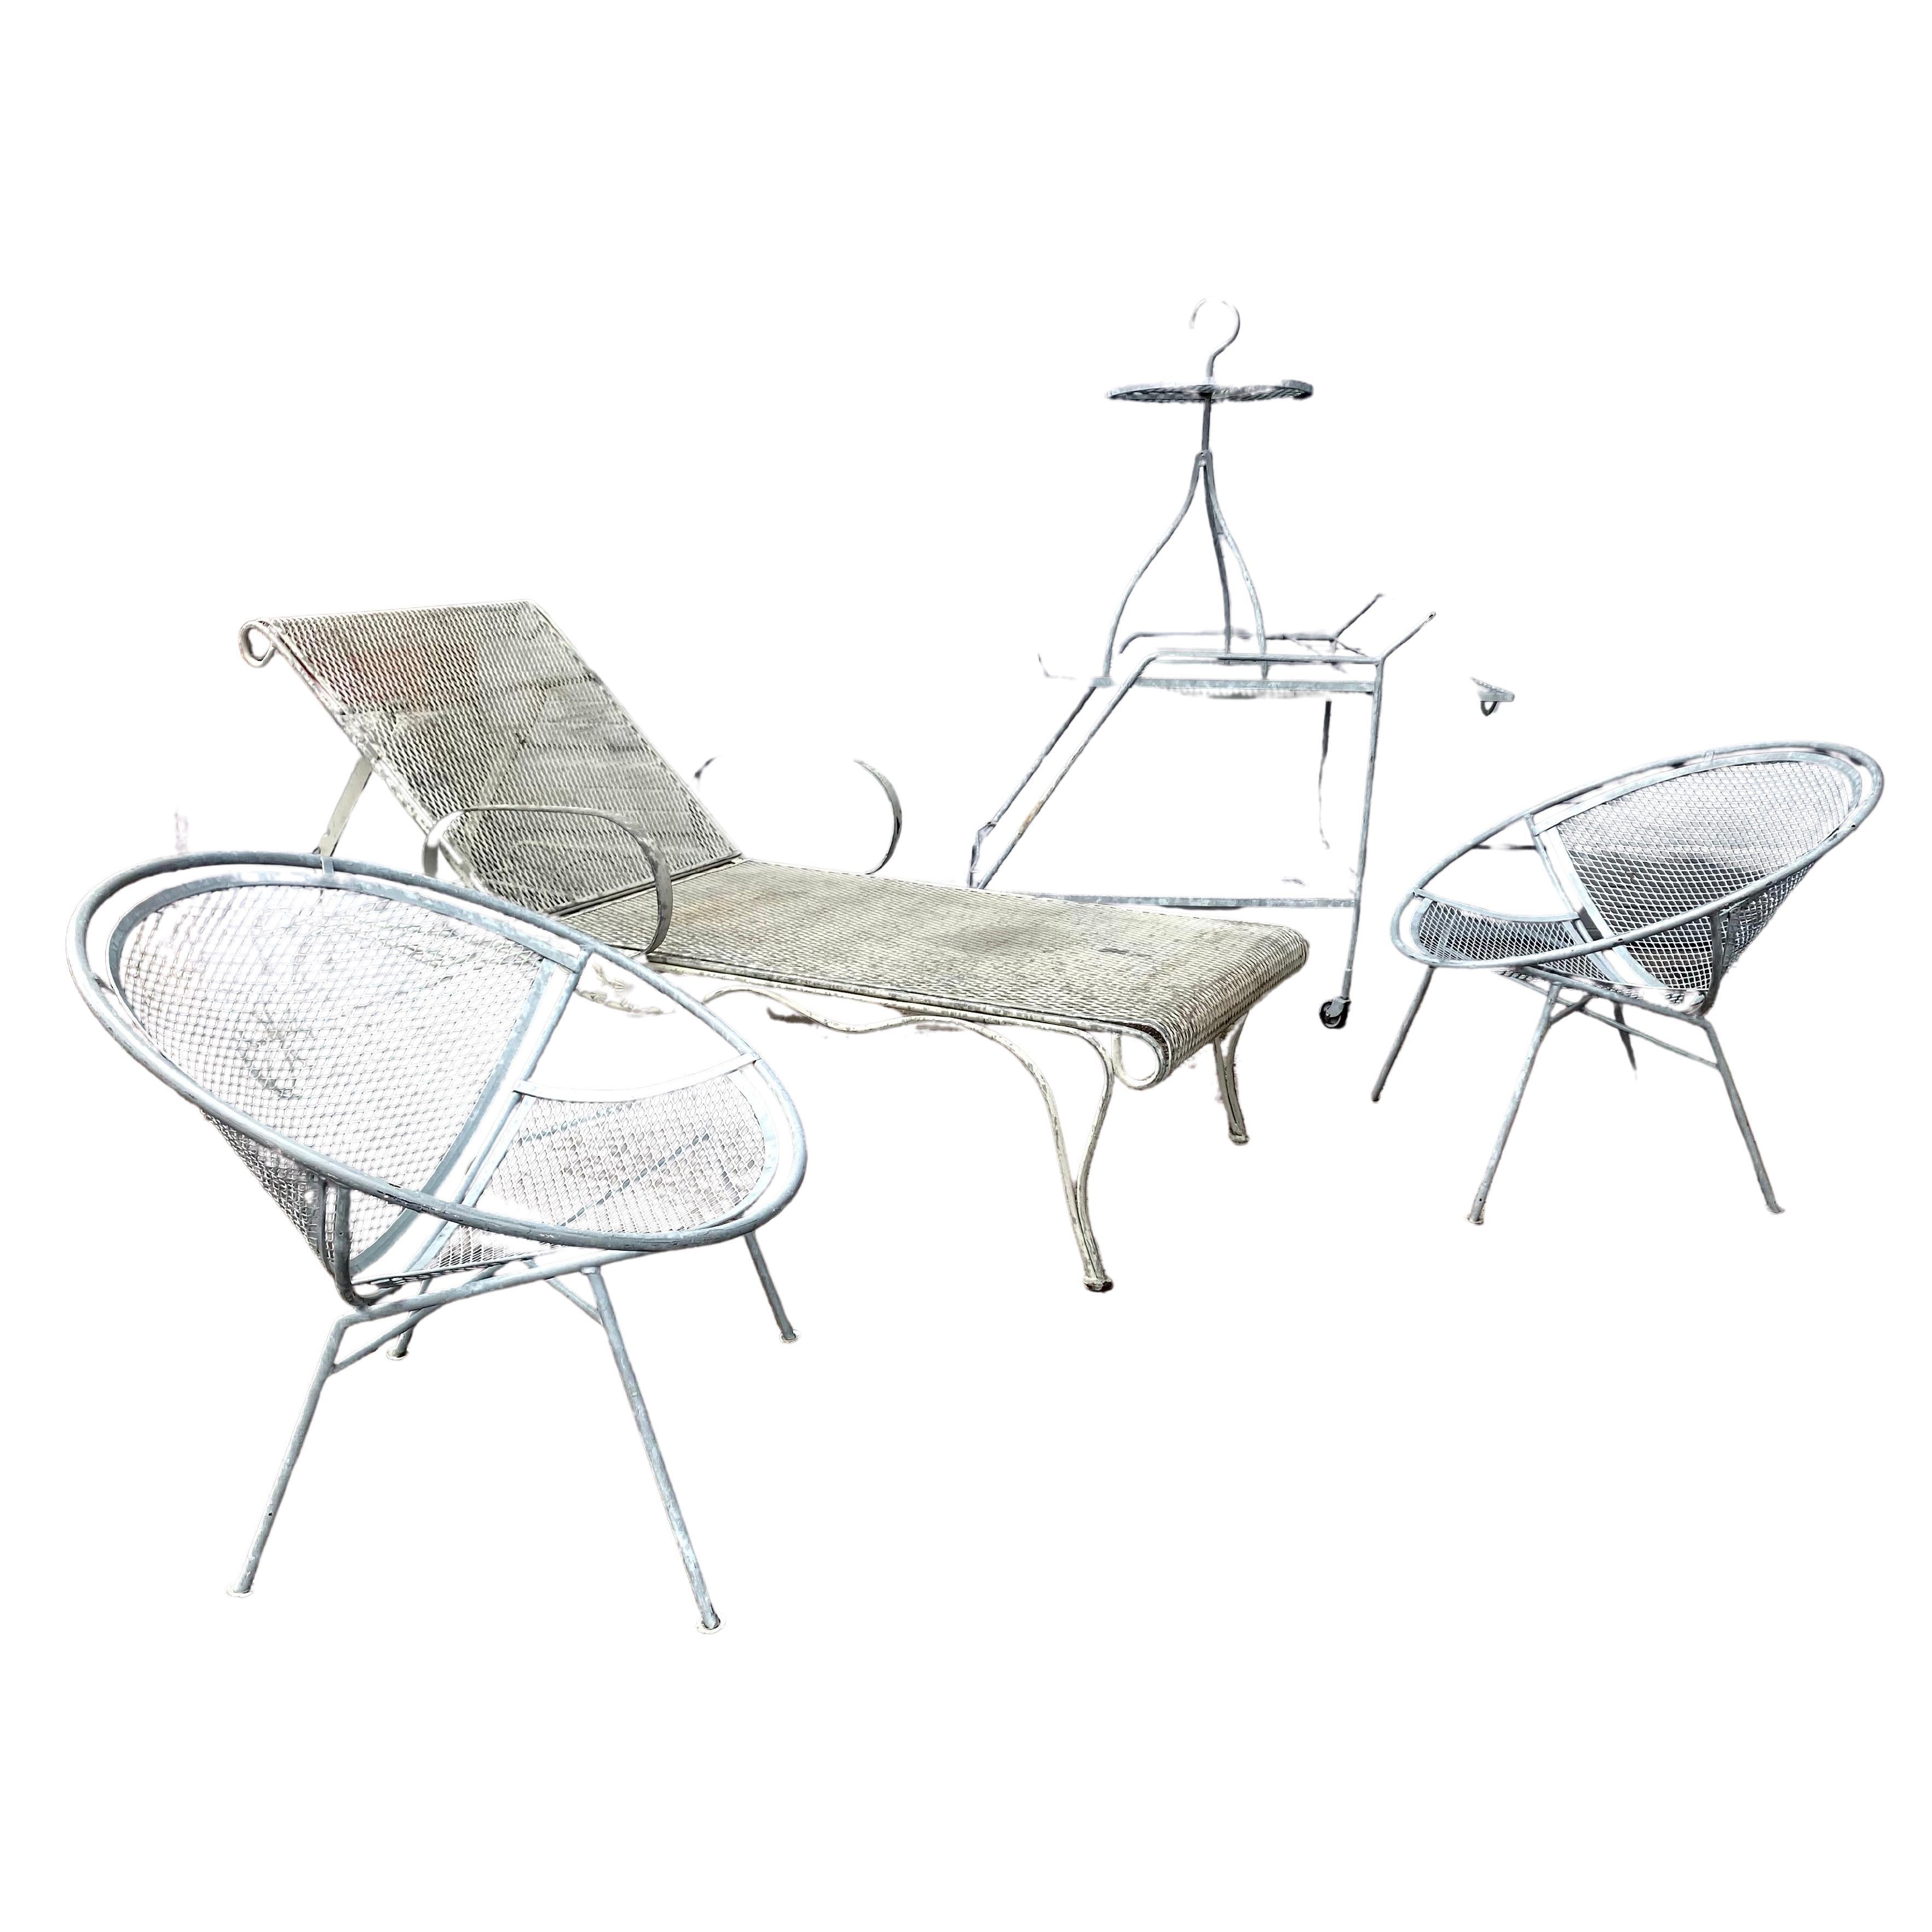 5 pièces Salterini / Tempestini Garden Furnishings.Radar Chairs,Chaise,Cart